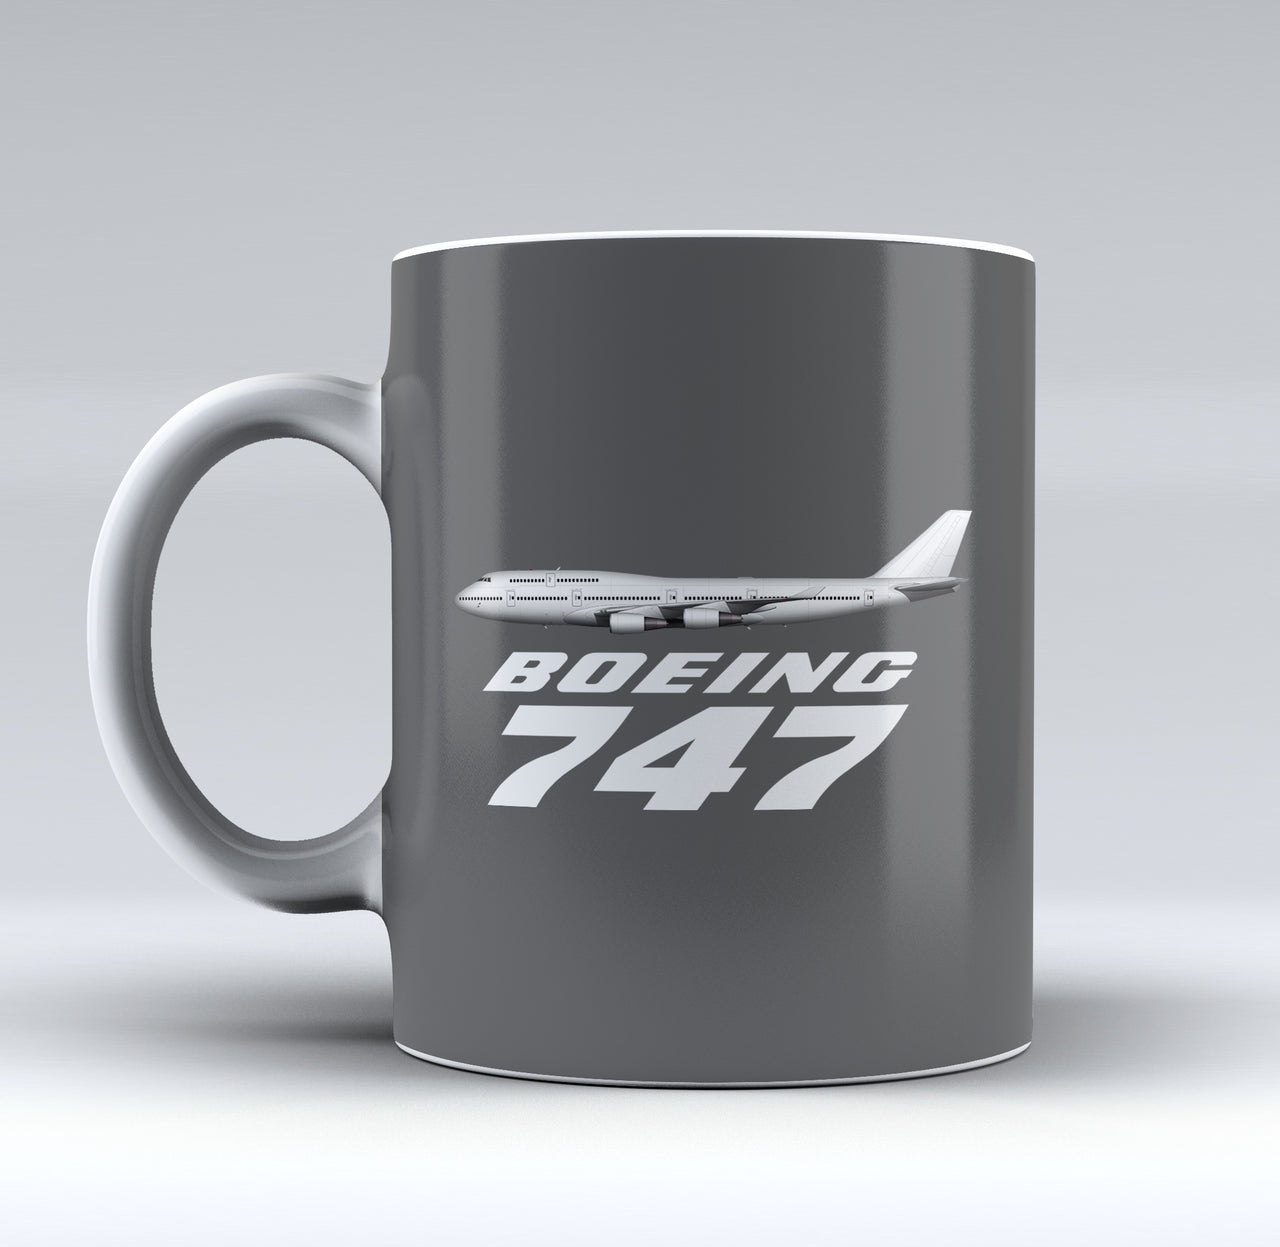 The Boeing 747 Designed Mugs